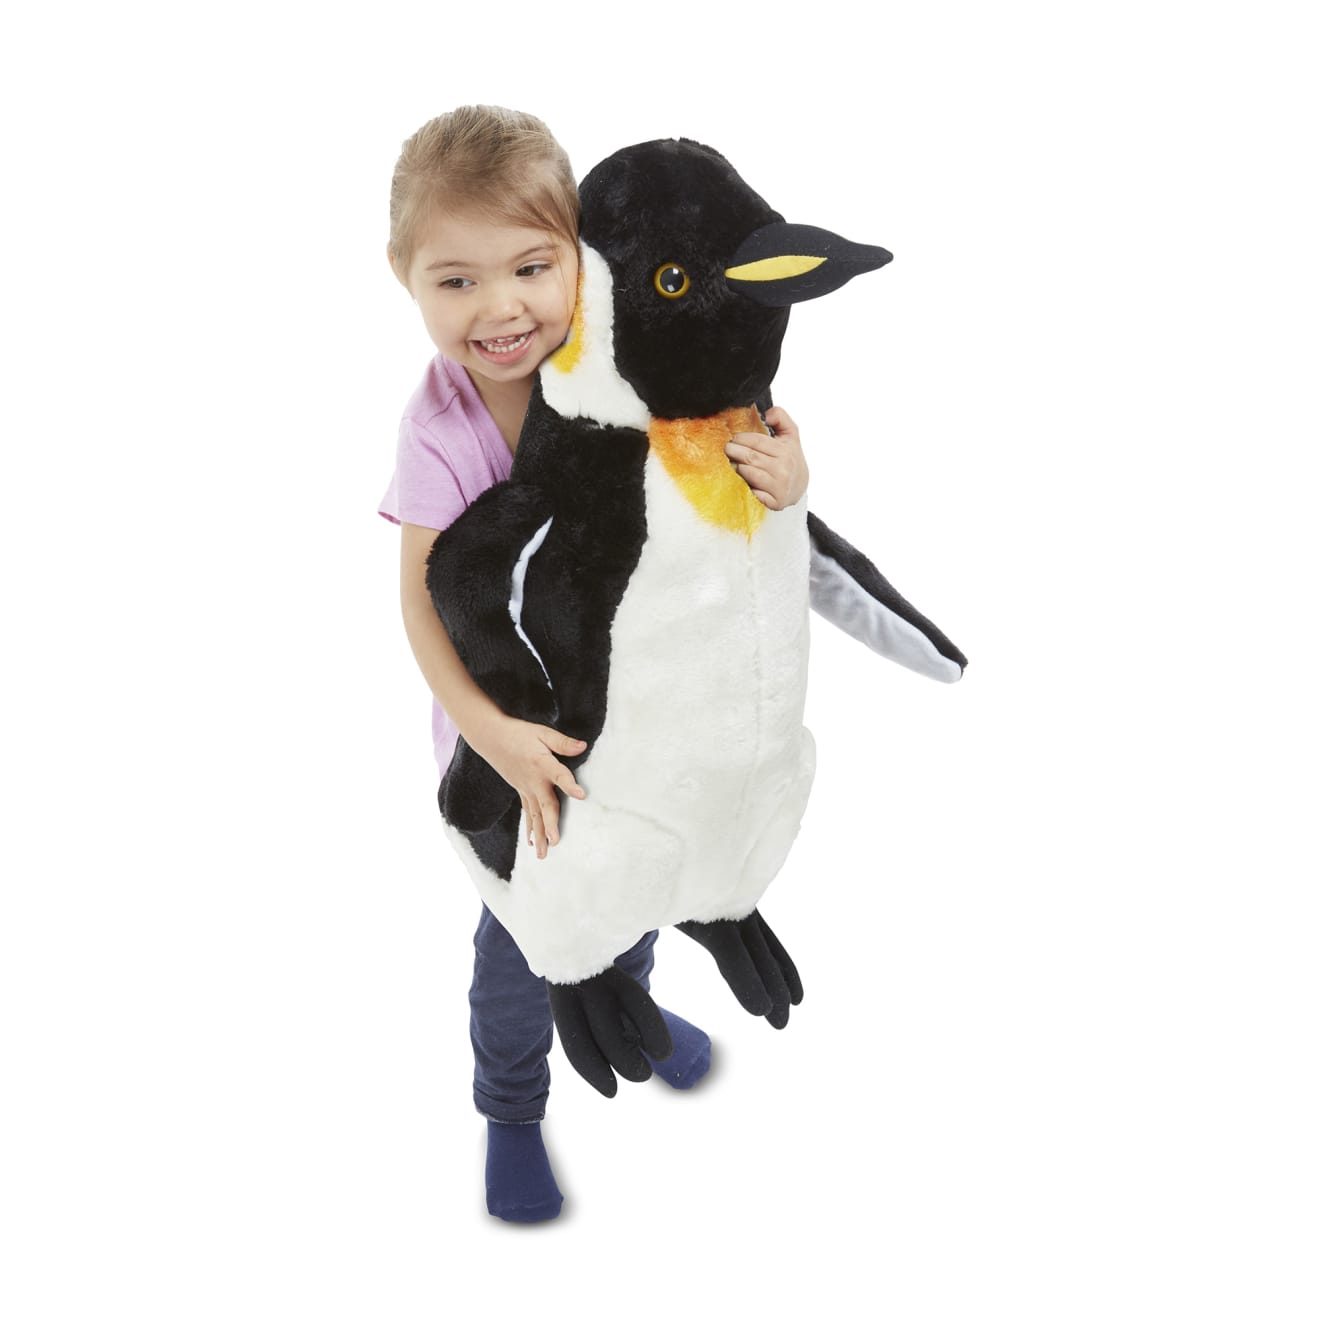 Penguin Giant Stuffed Animal - 2 Feet Tall| Melissa & Doug